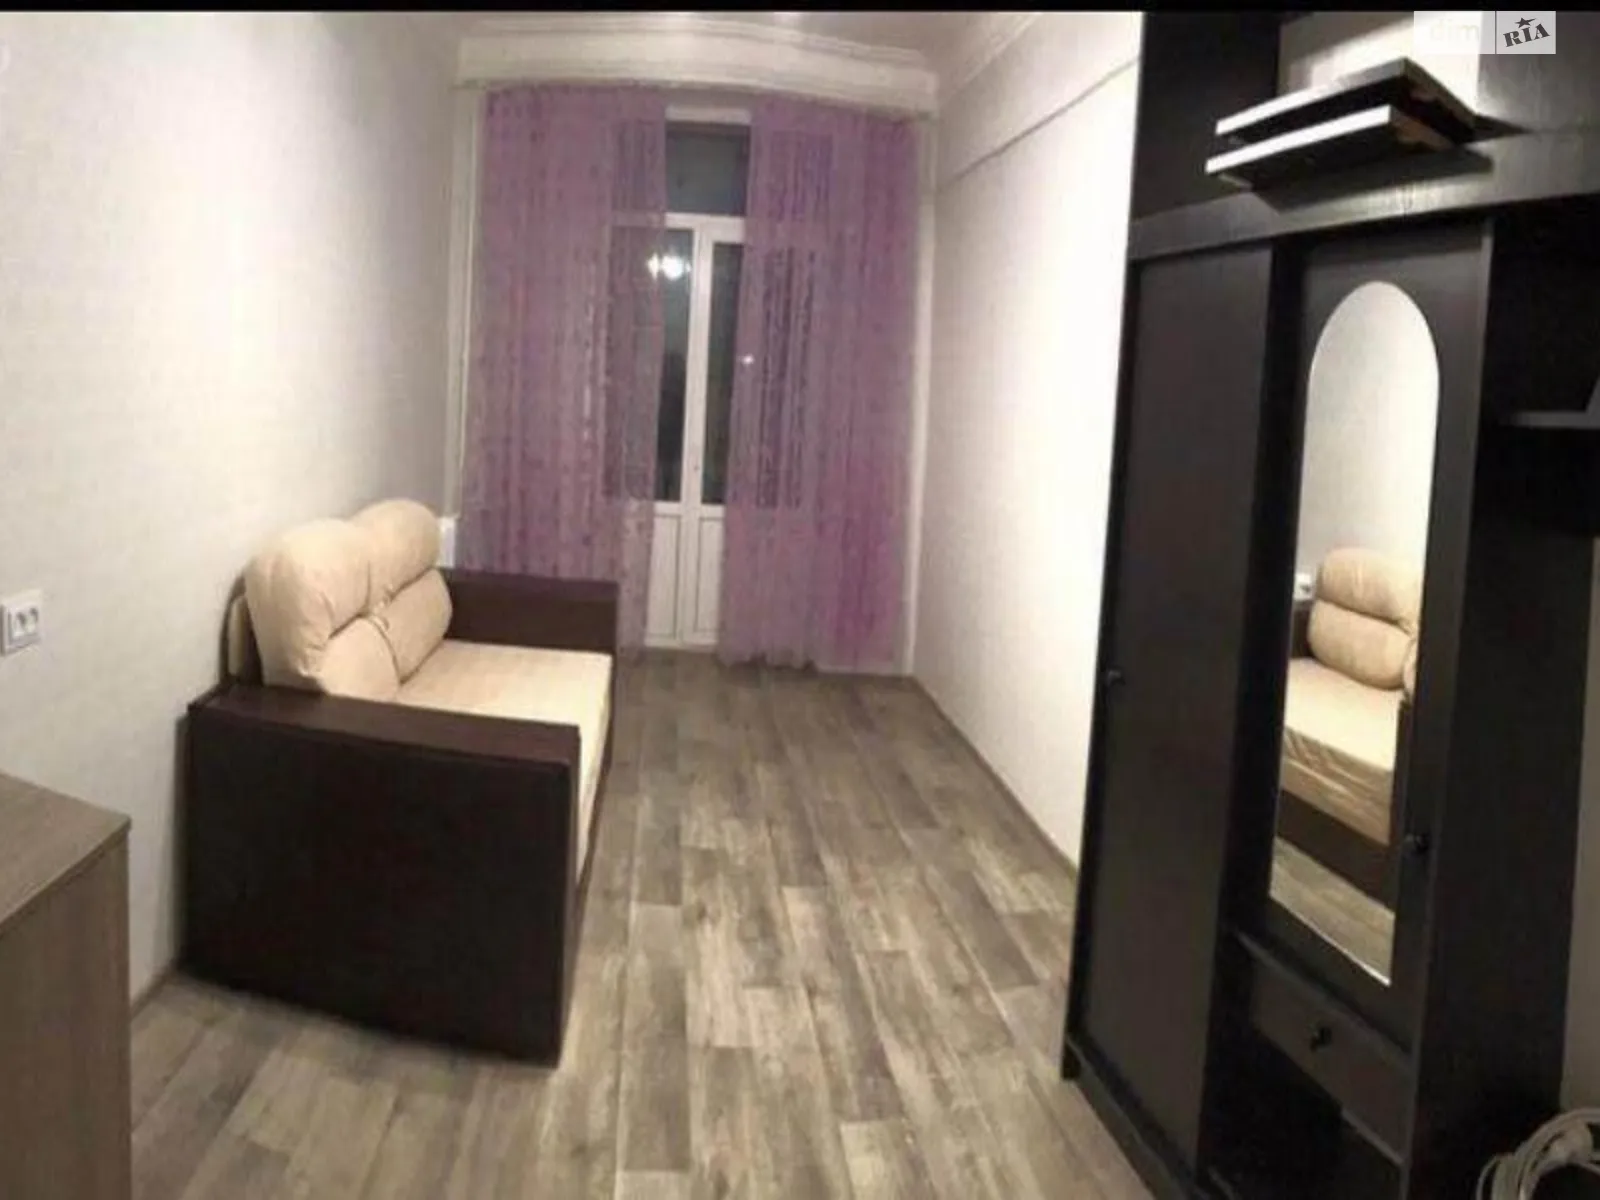 Продается комната 150 кв. м в Киеве, цена: 17000 $ - фото 1